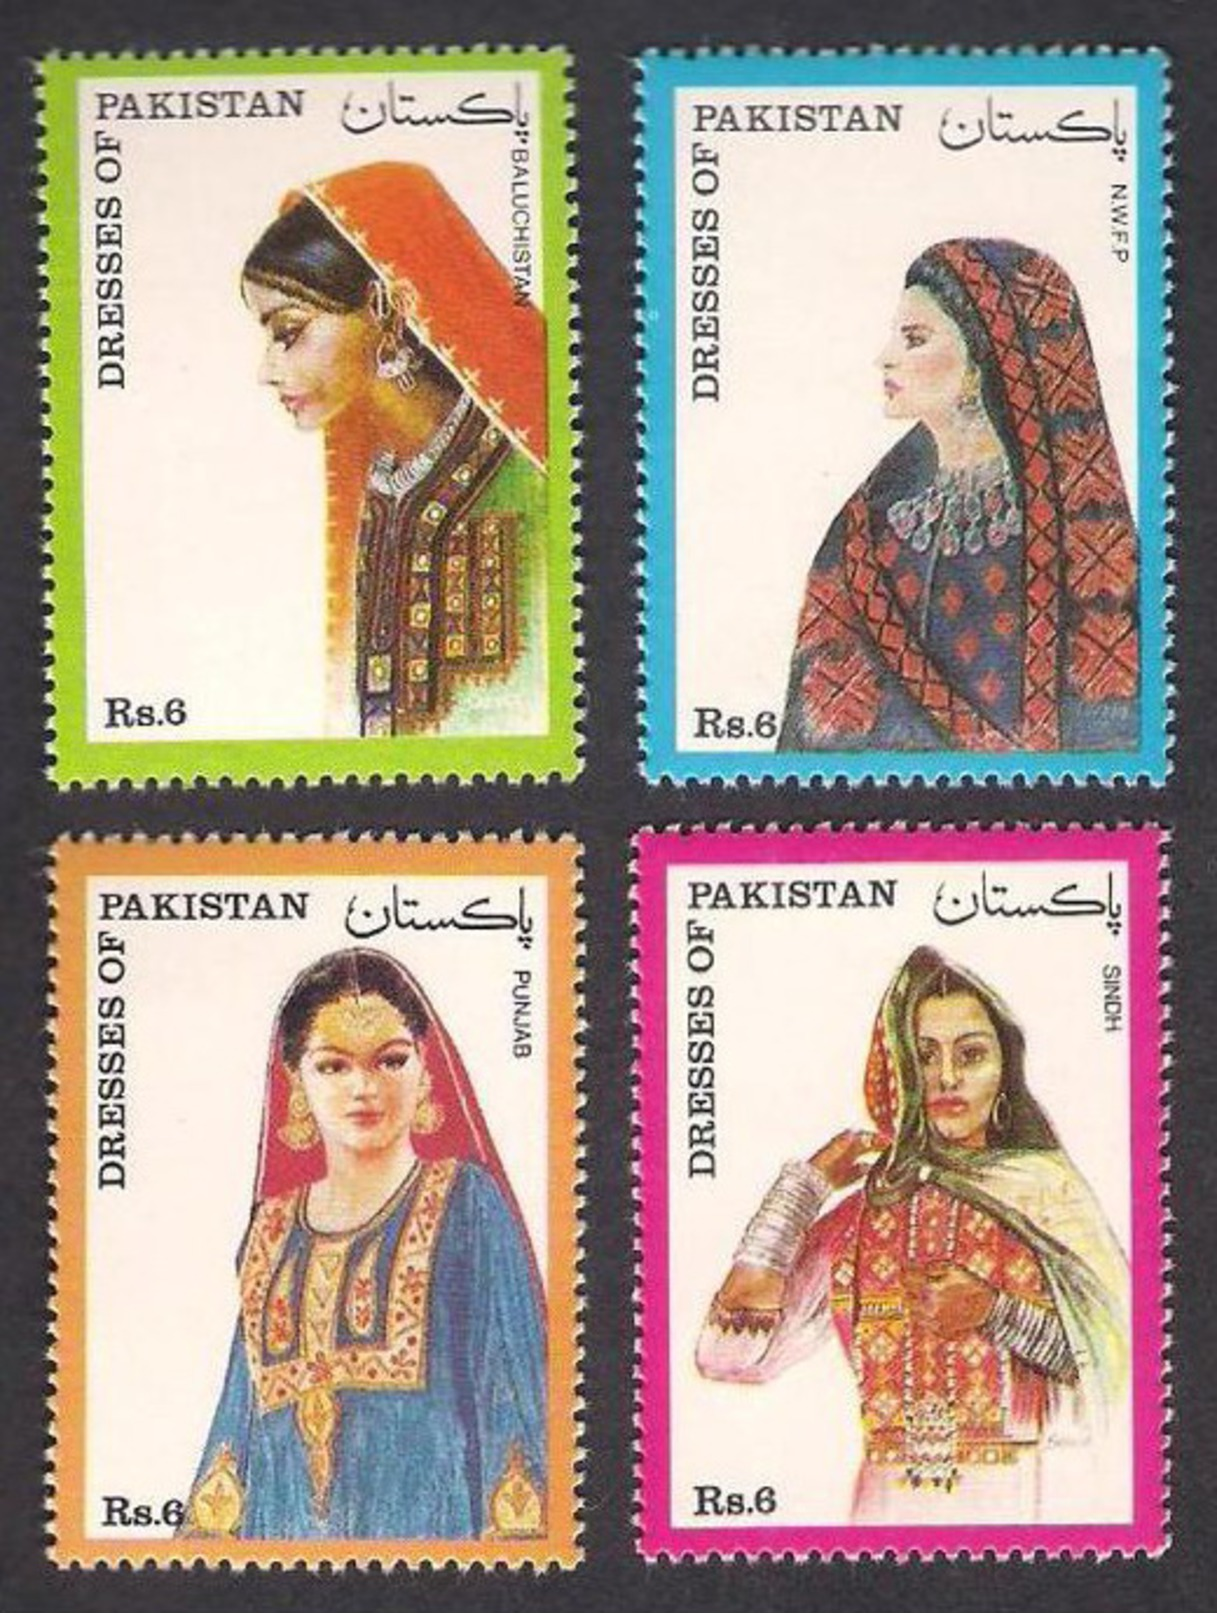 1993 Pakistan Dresses From Punjab, Sindh, NWFP And Baluchistan Provinces, Culture, Costumes (4v) MNH (PK-44) - Pakistan